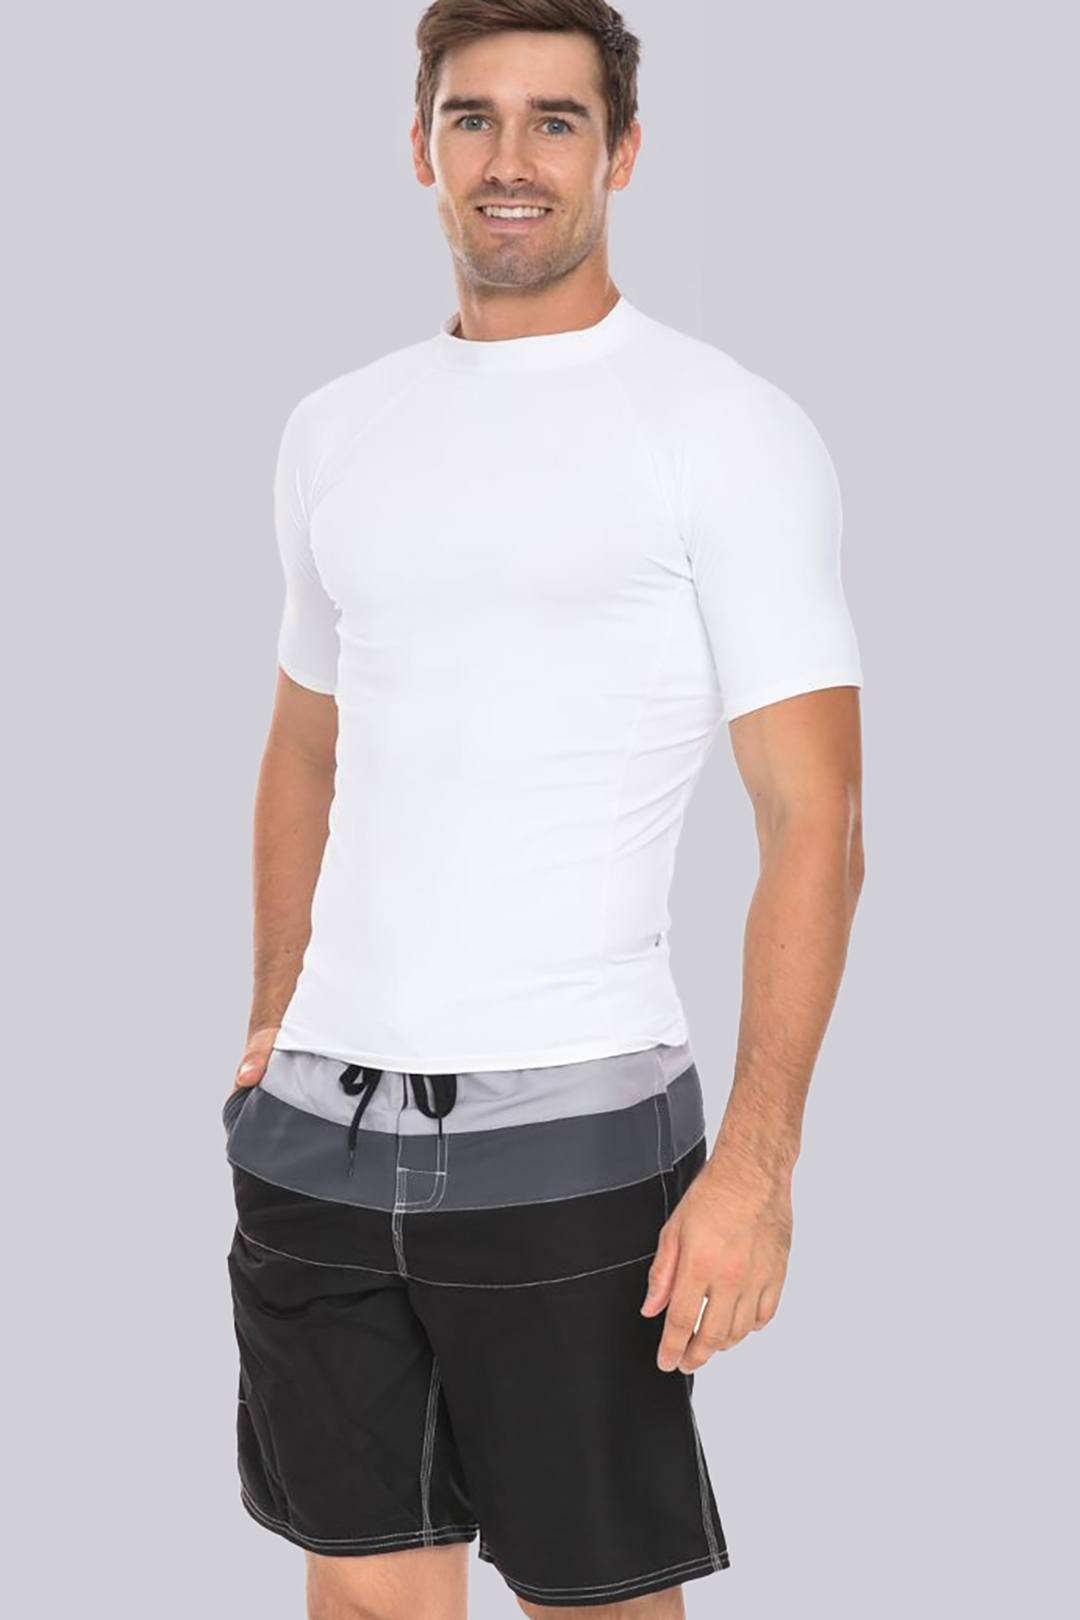 https://www.liquidyachtwear.com/wp-content/uploads/2020/11/liquid-yacht-wear-mens-short-sleeve-rash-guard-white.jpg